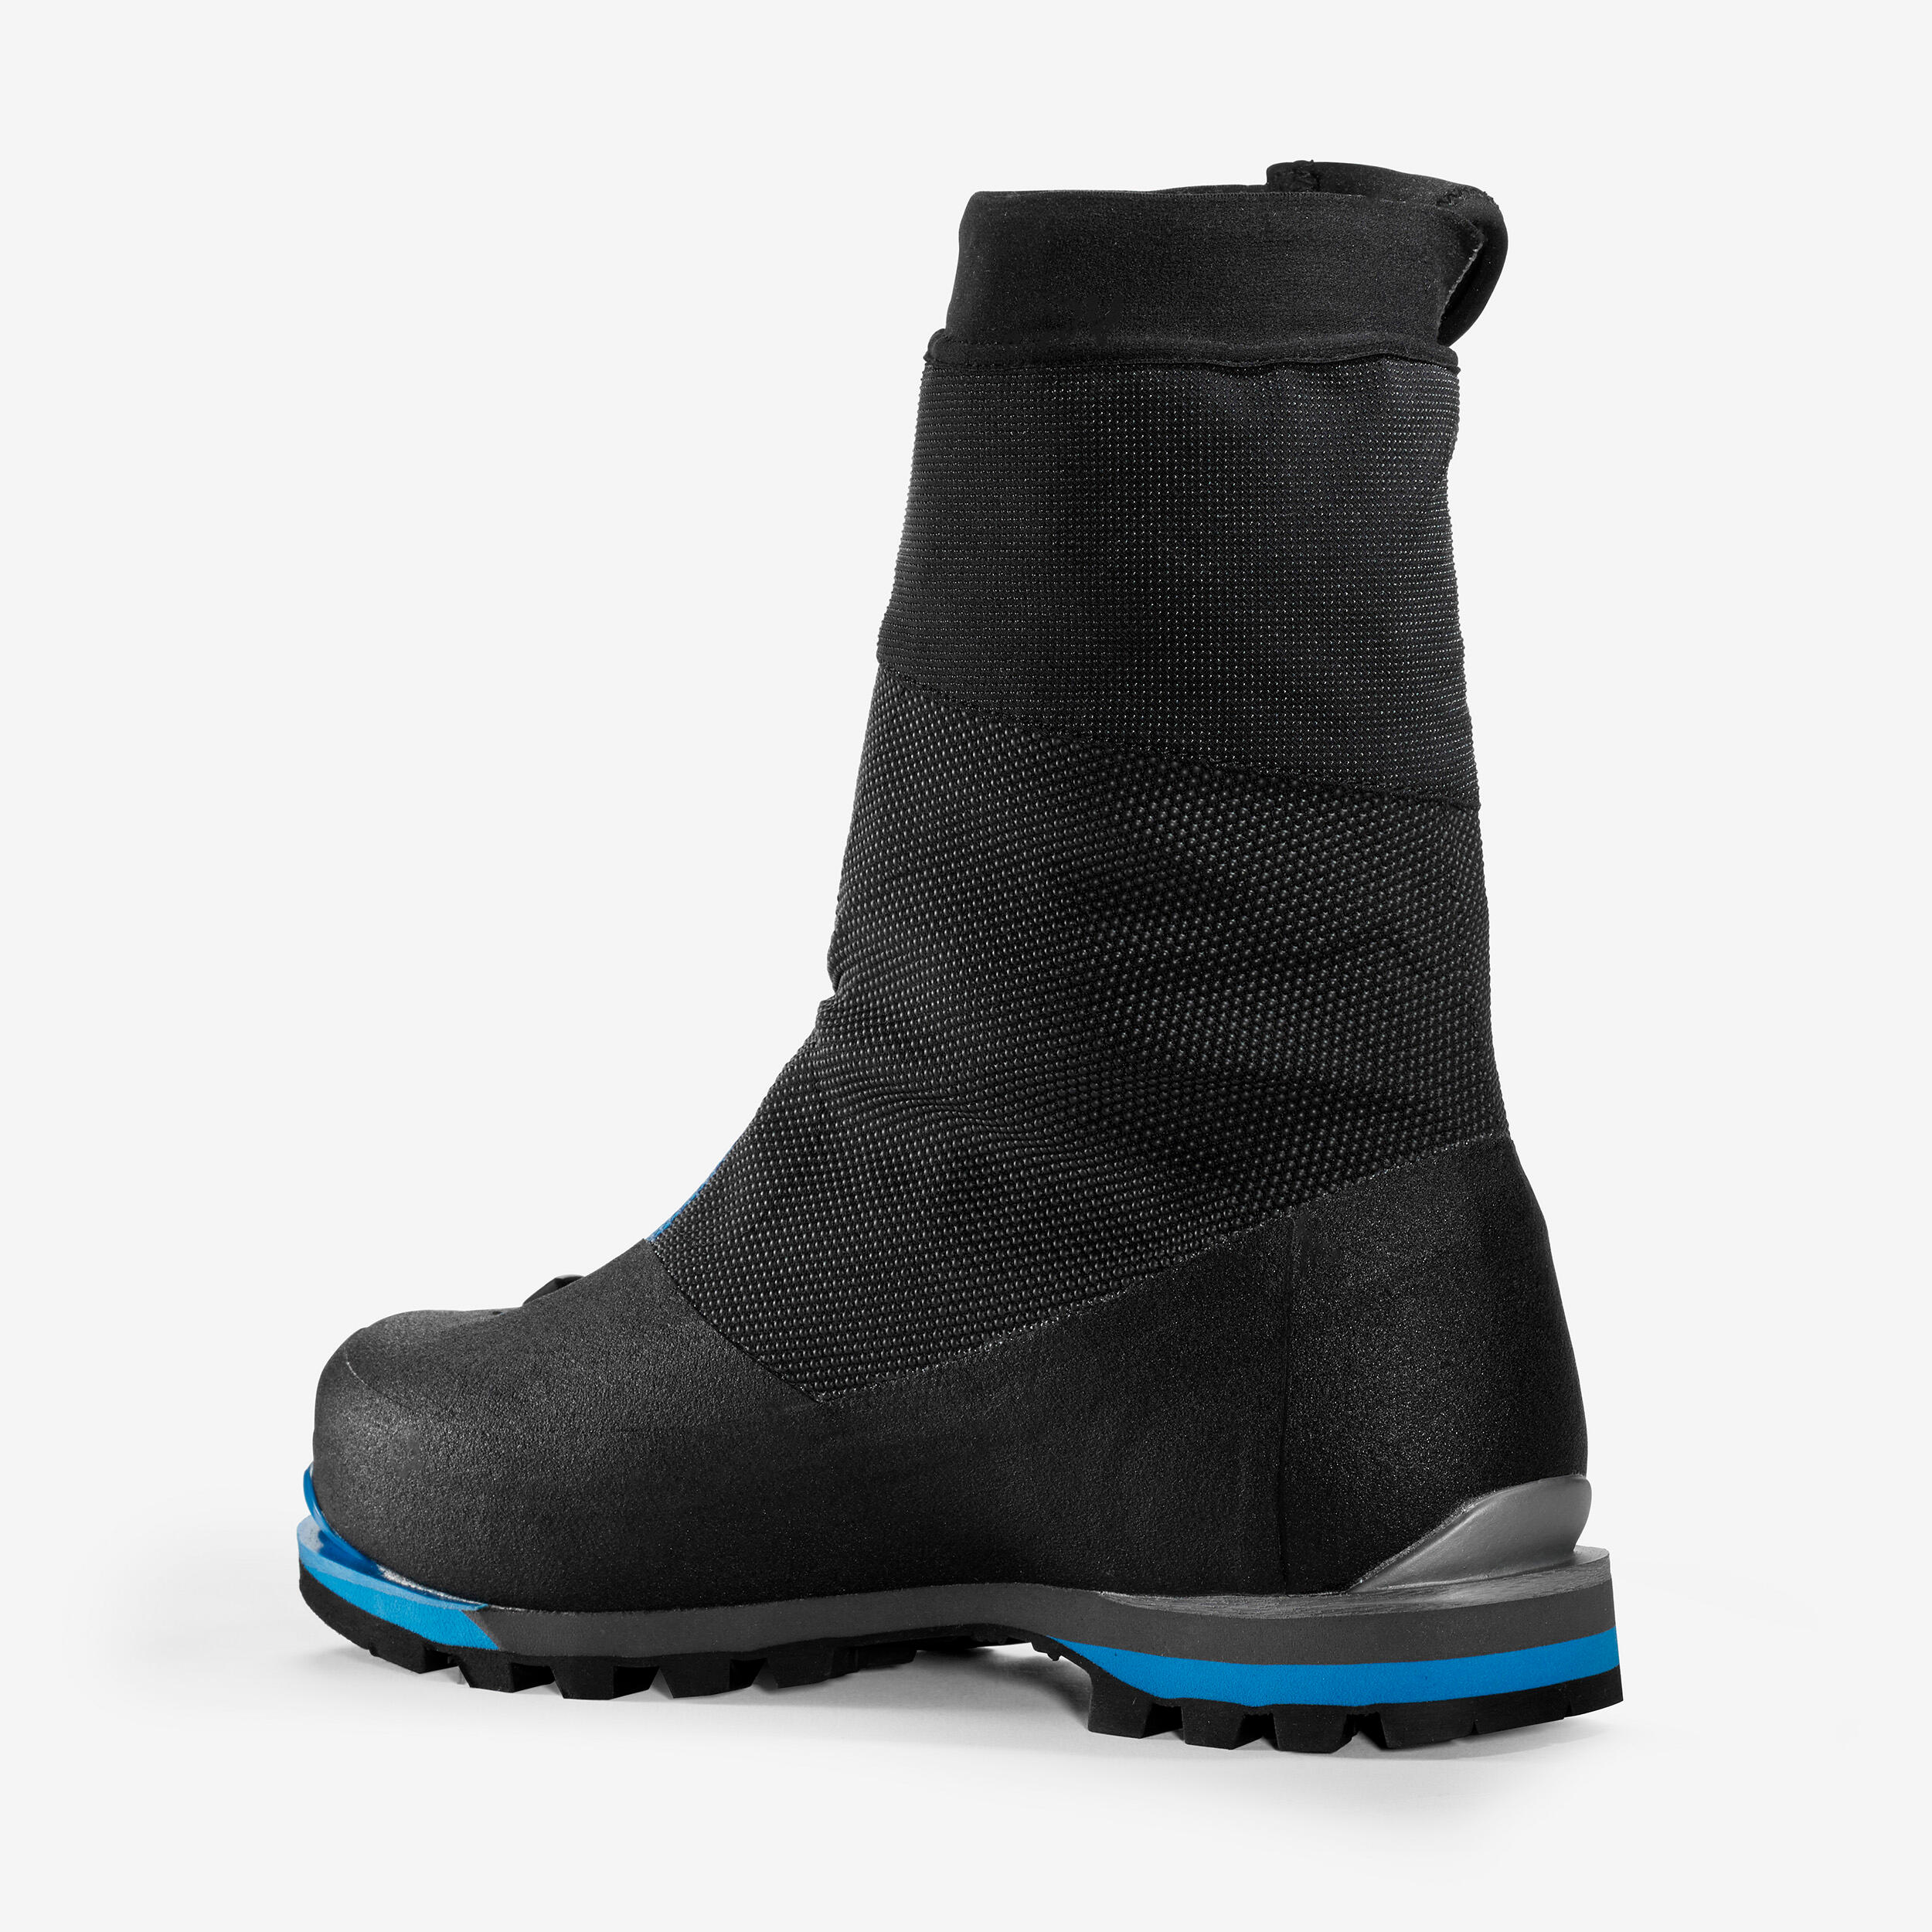 All-season mountaineering boots - ICE Blue/Black 9/12